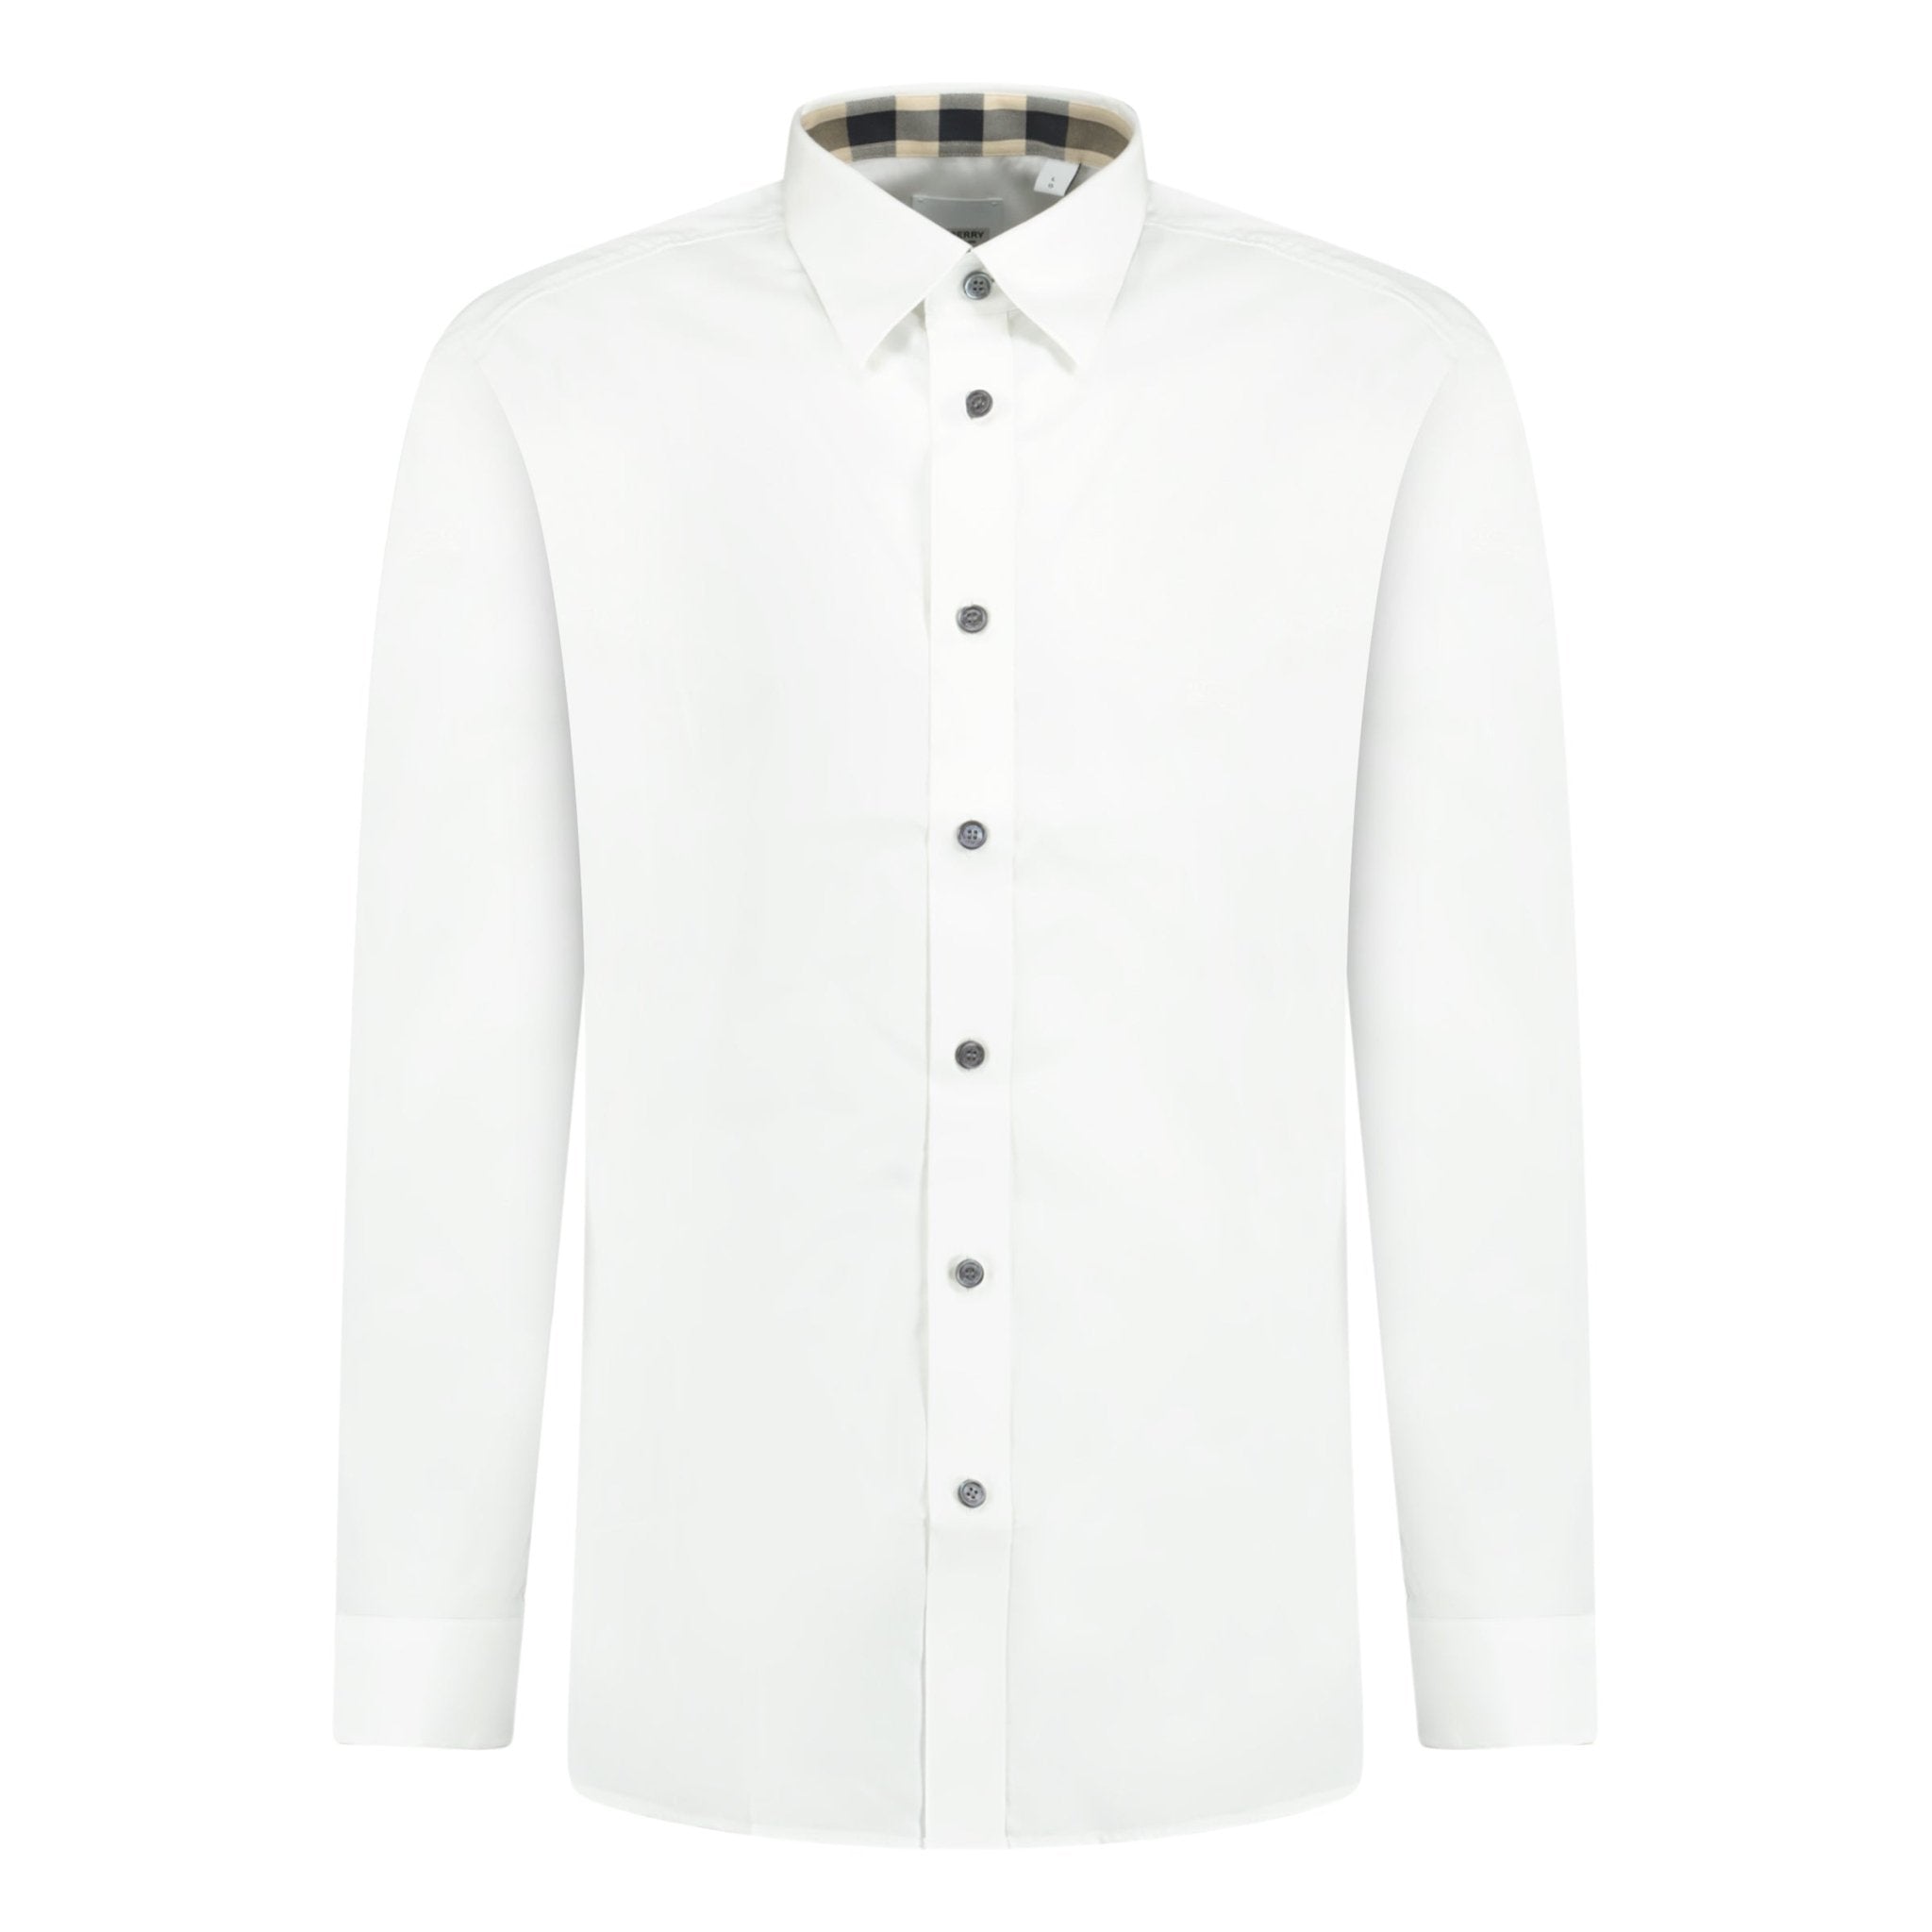 Burberry Classic Check Neck Cambridge Shirt White